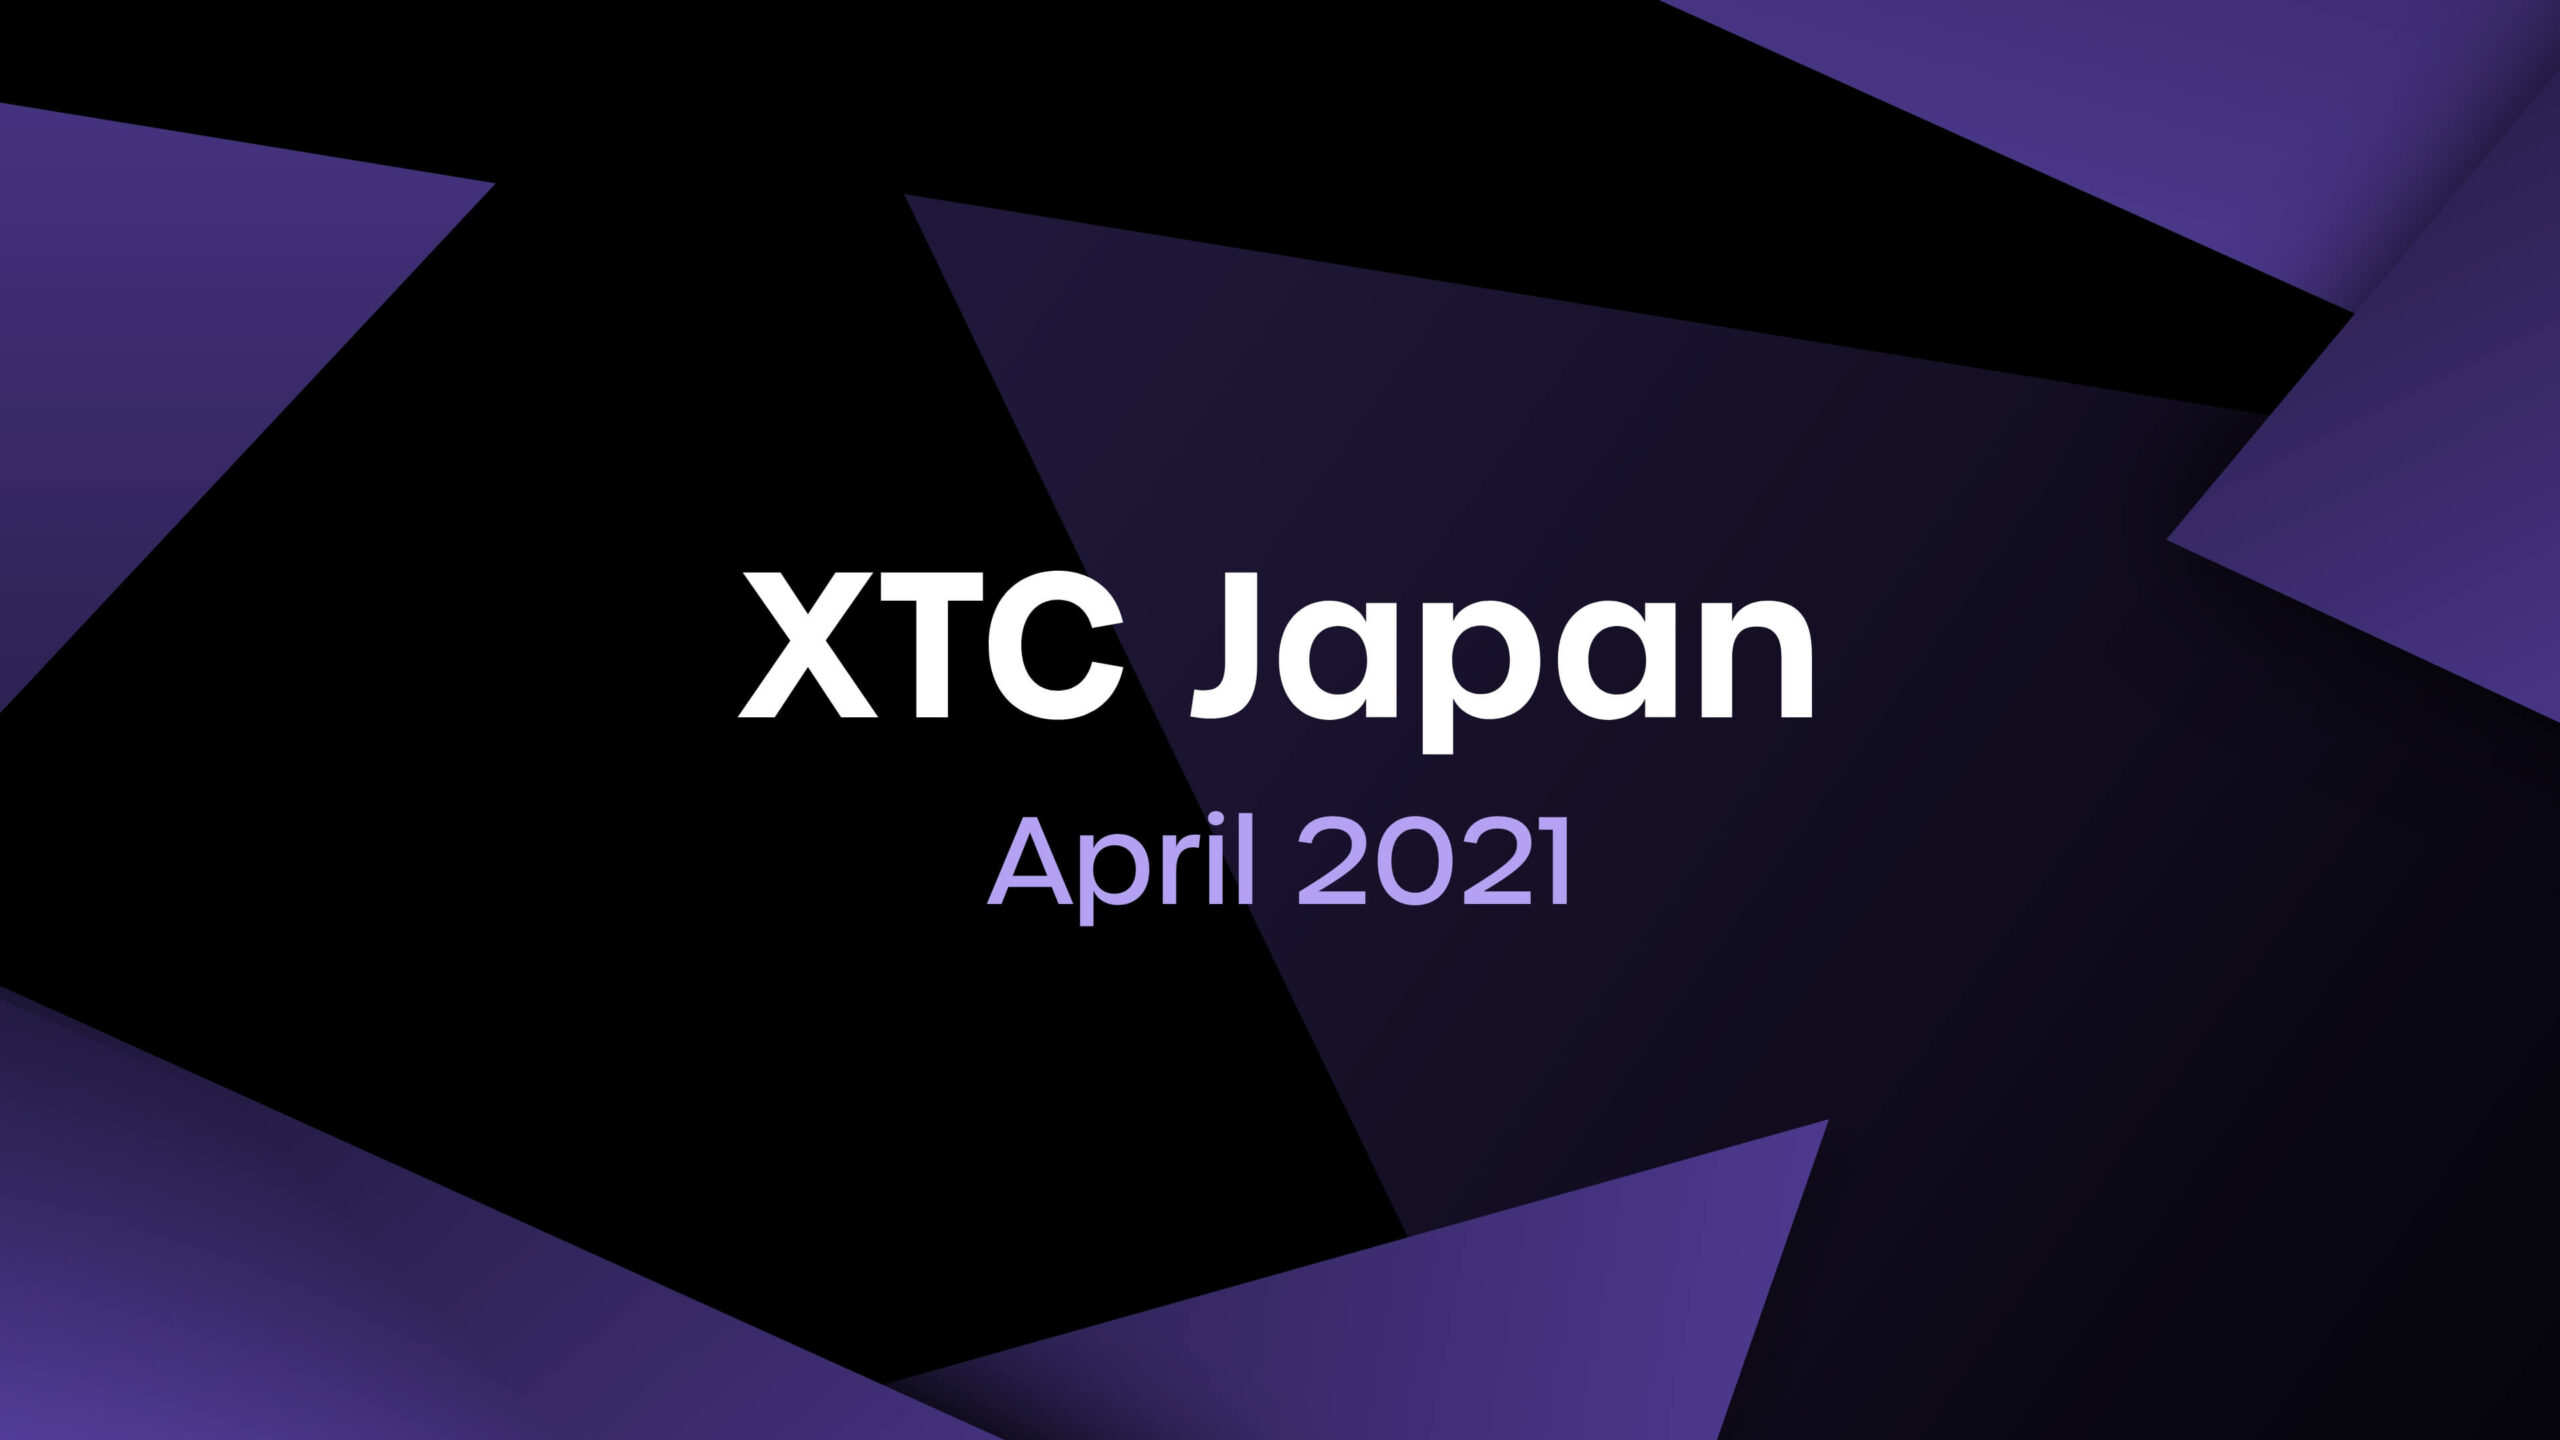 XTC Japan